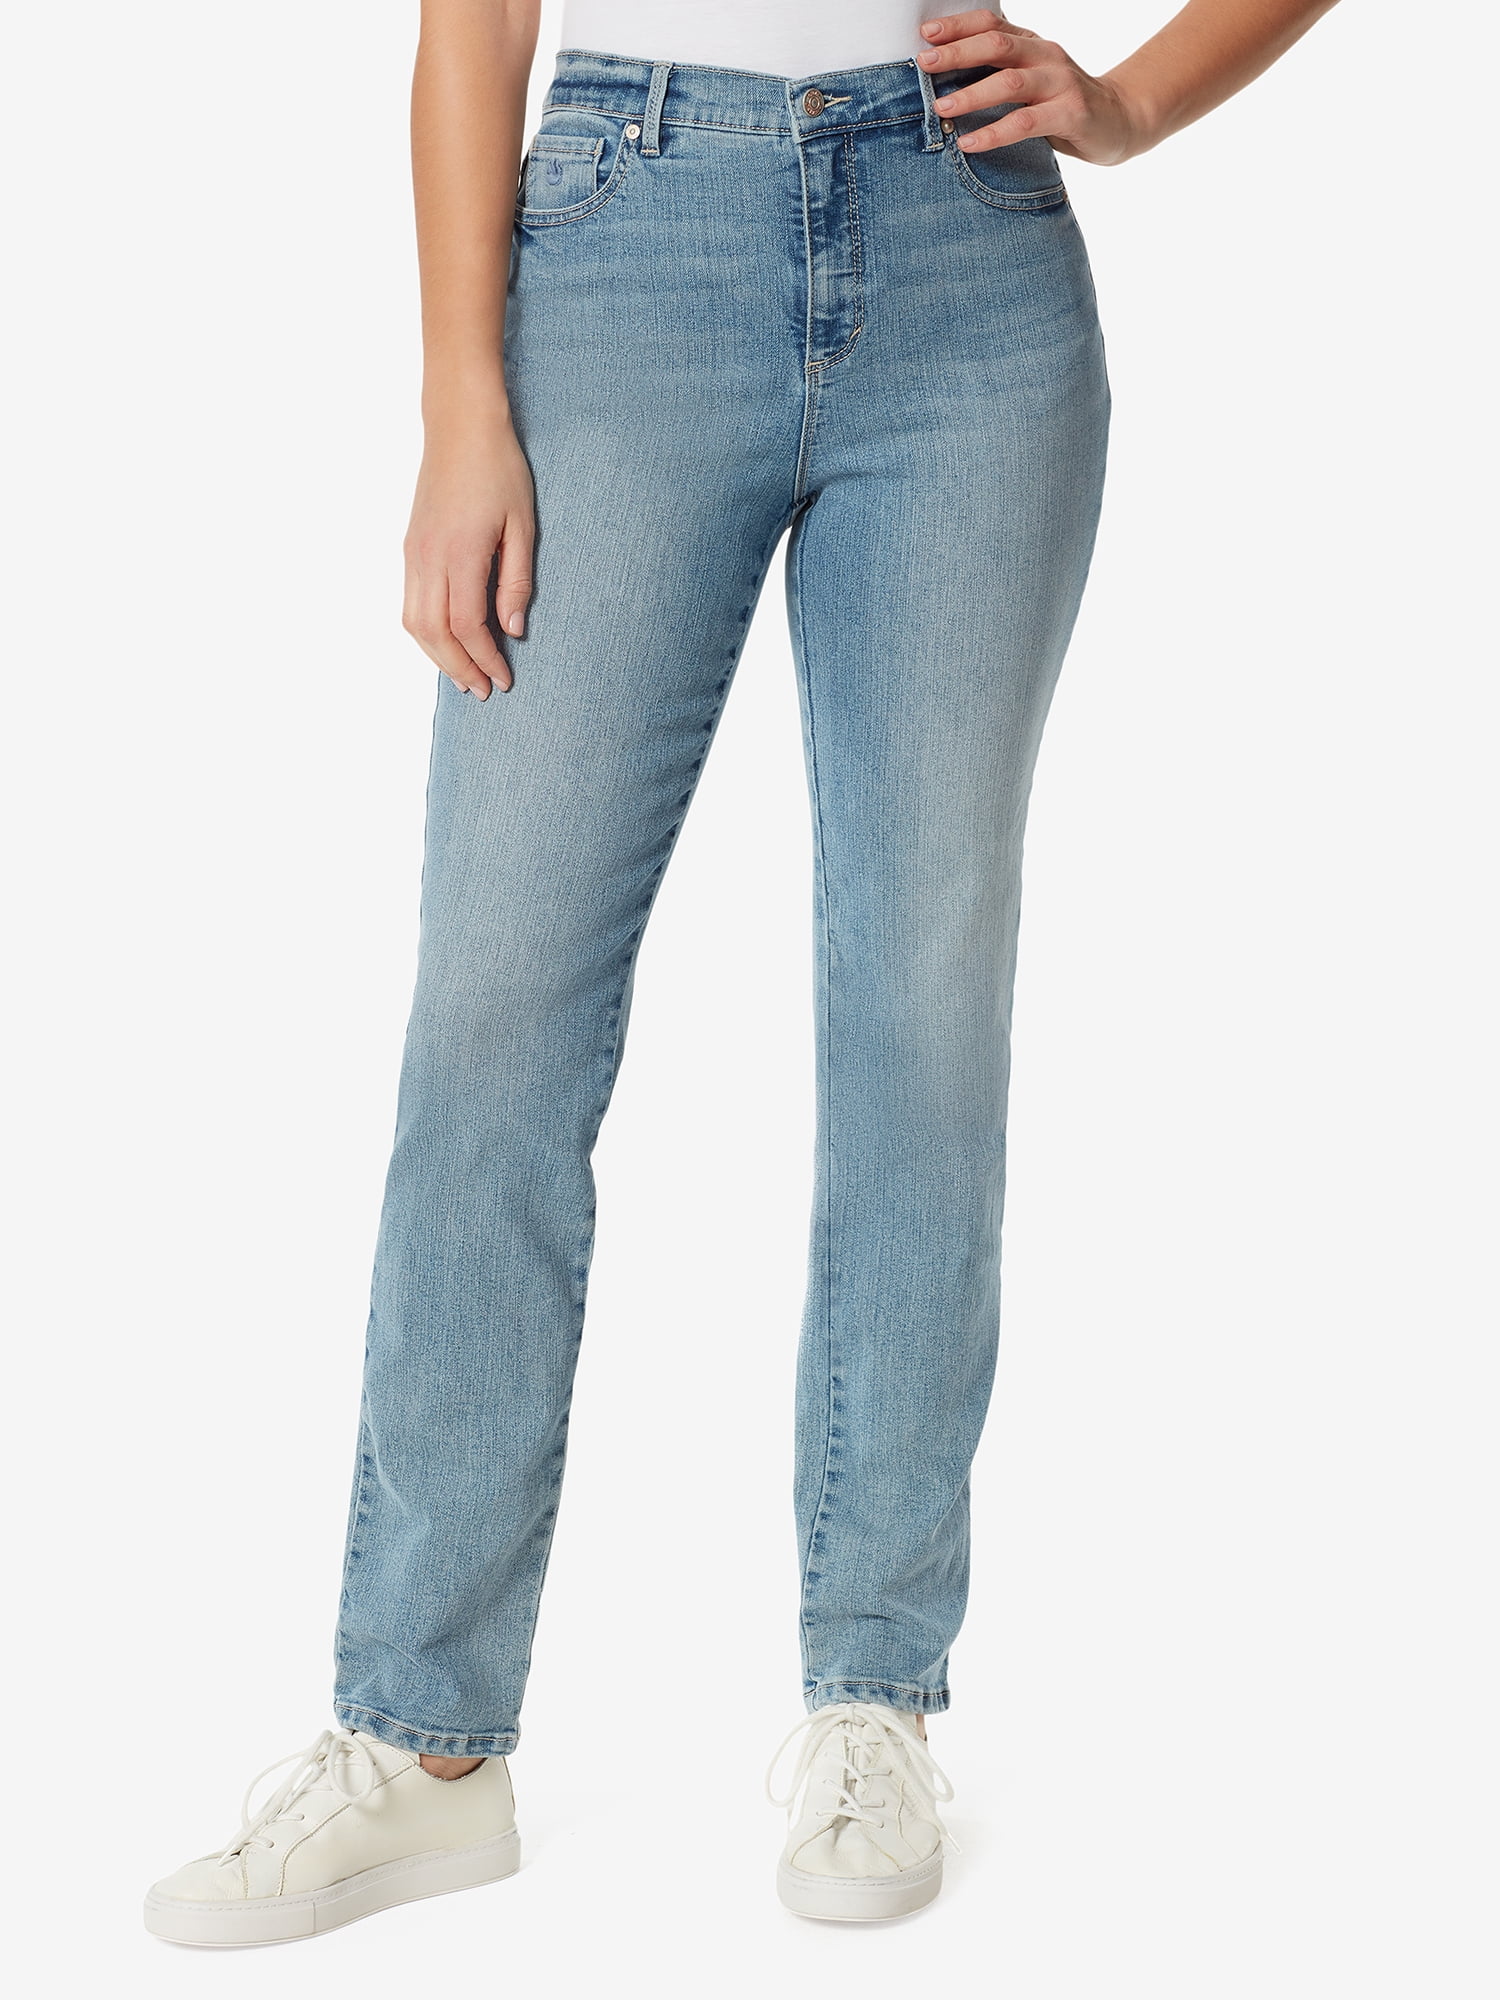 Gloria Vanderbilt Jeans Size Chart